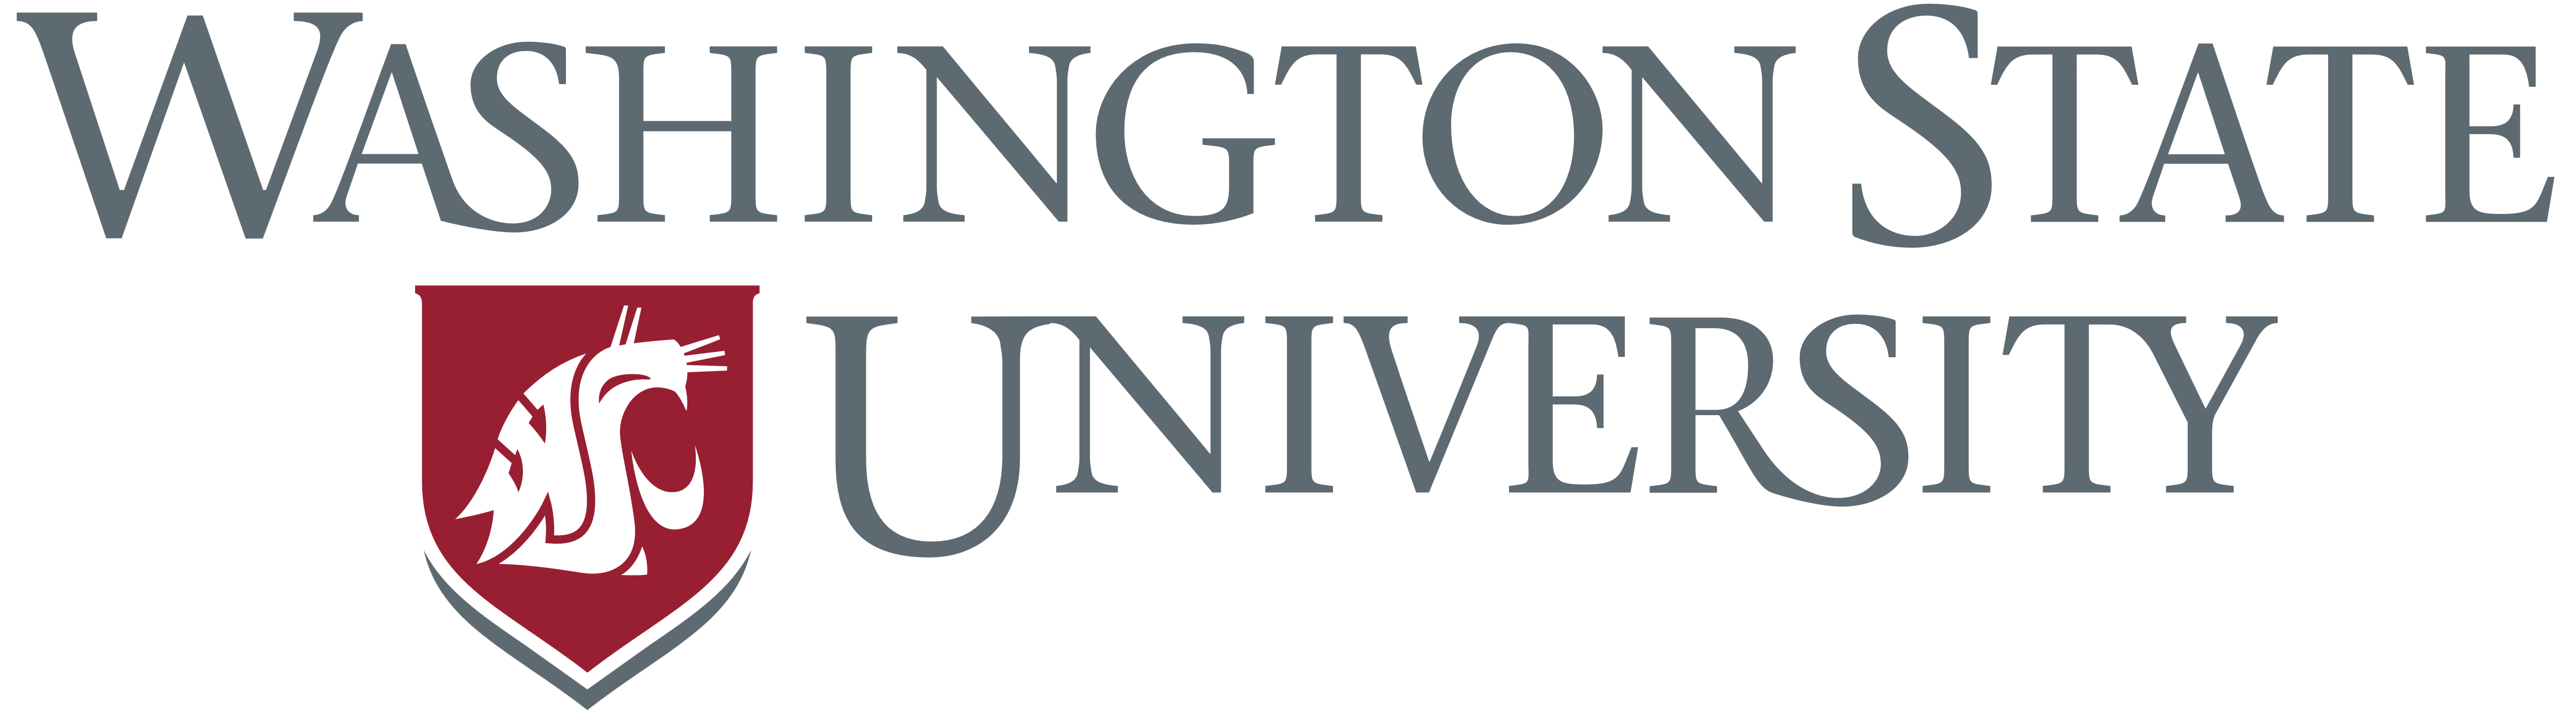 Washington_State_University_logo.png